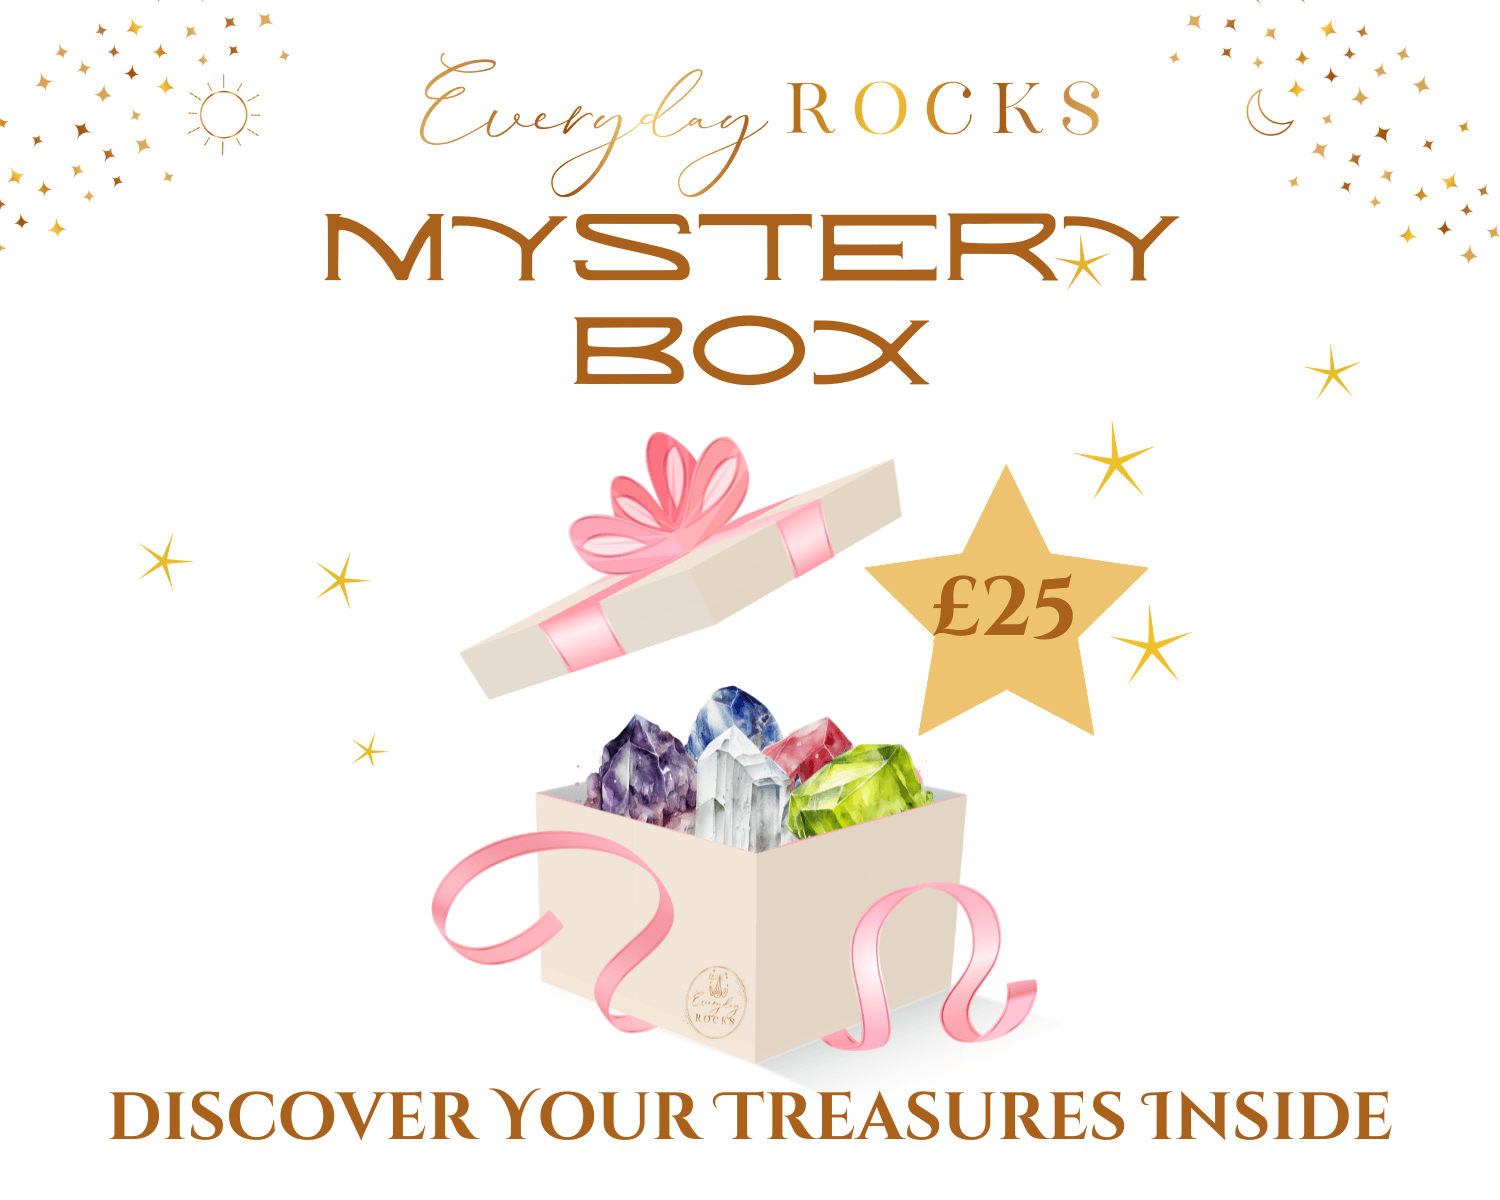 £25 Mystery Box - Everyday Rocks